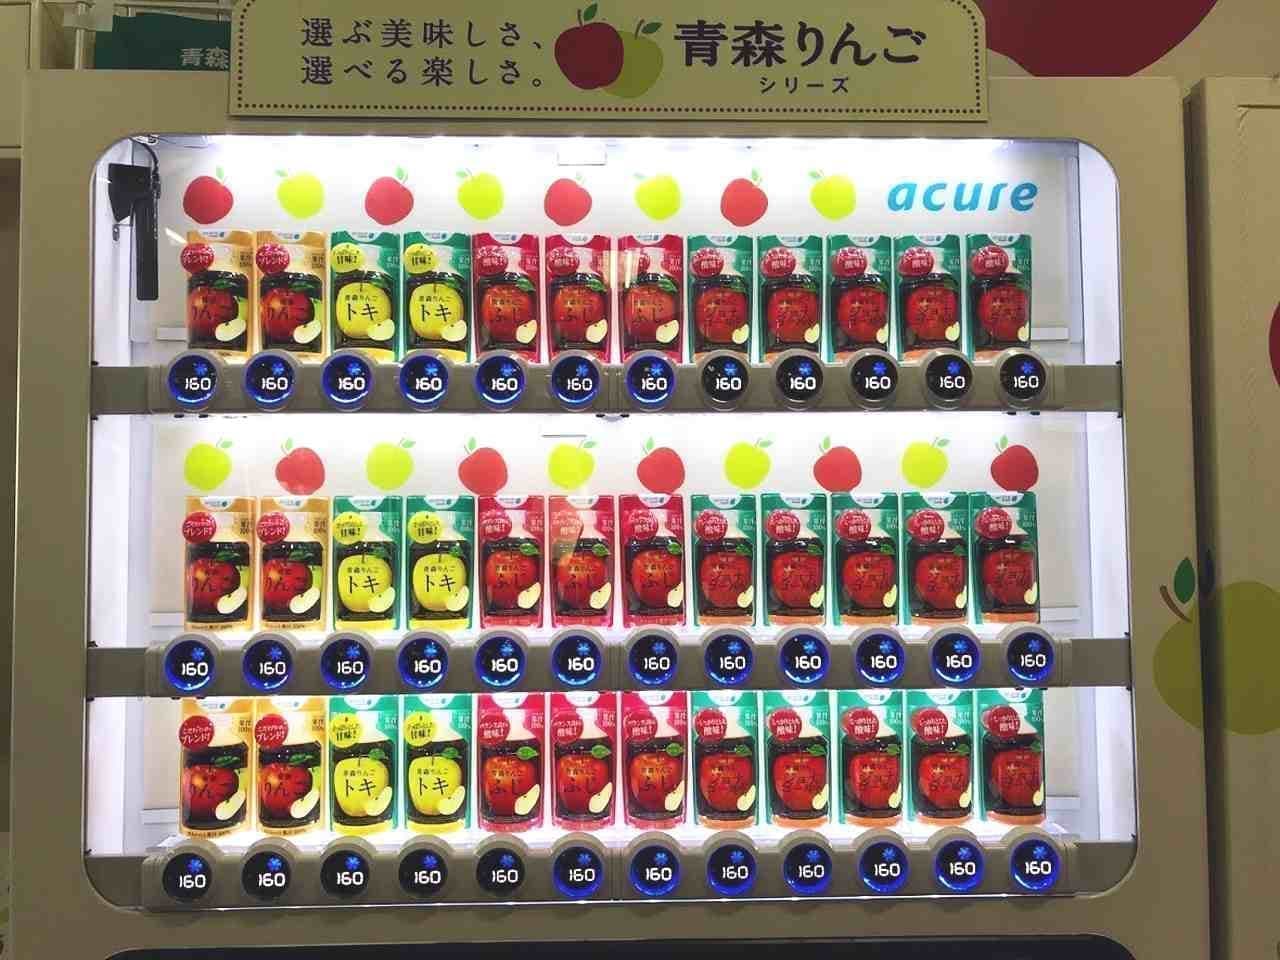 Apple vending machine" at JR Aomori Station